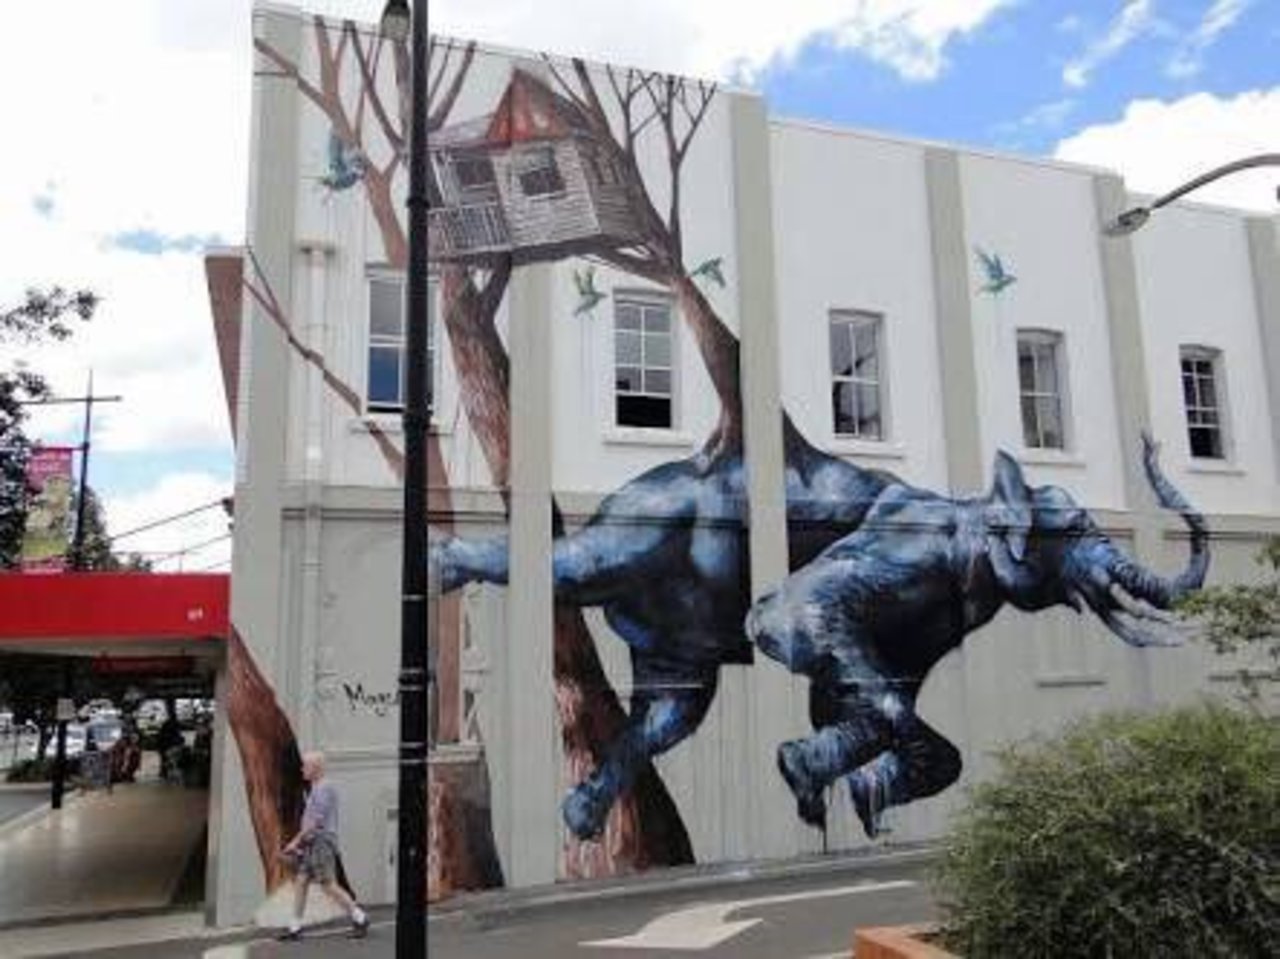 #Mural by Fintan Magee #Toowoomba #Australia #streetart #art #Grafitti https://t.co/GrRAzCBeBC